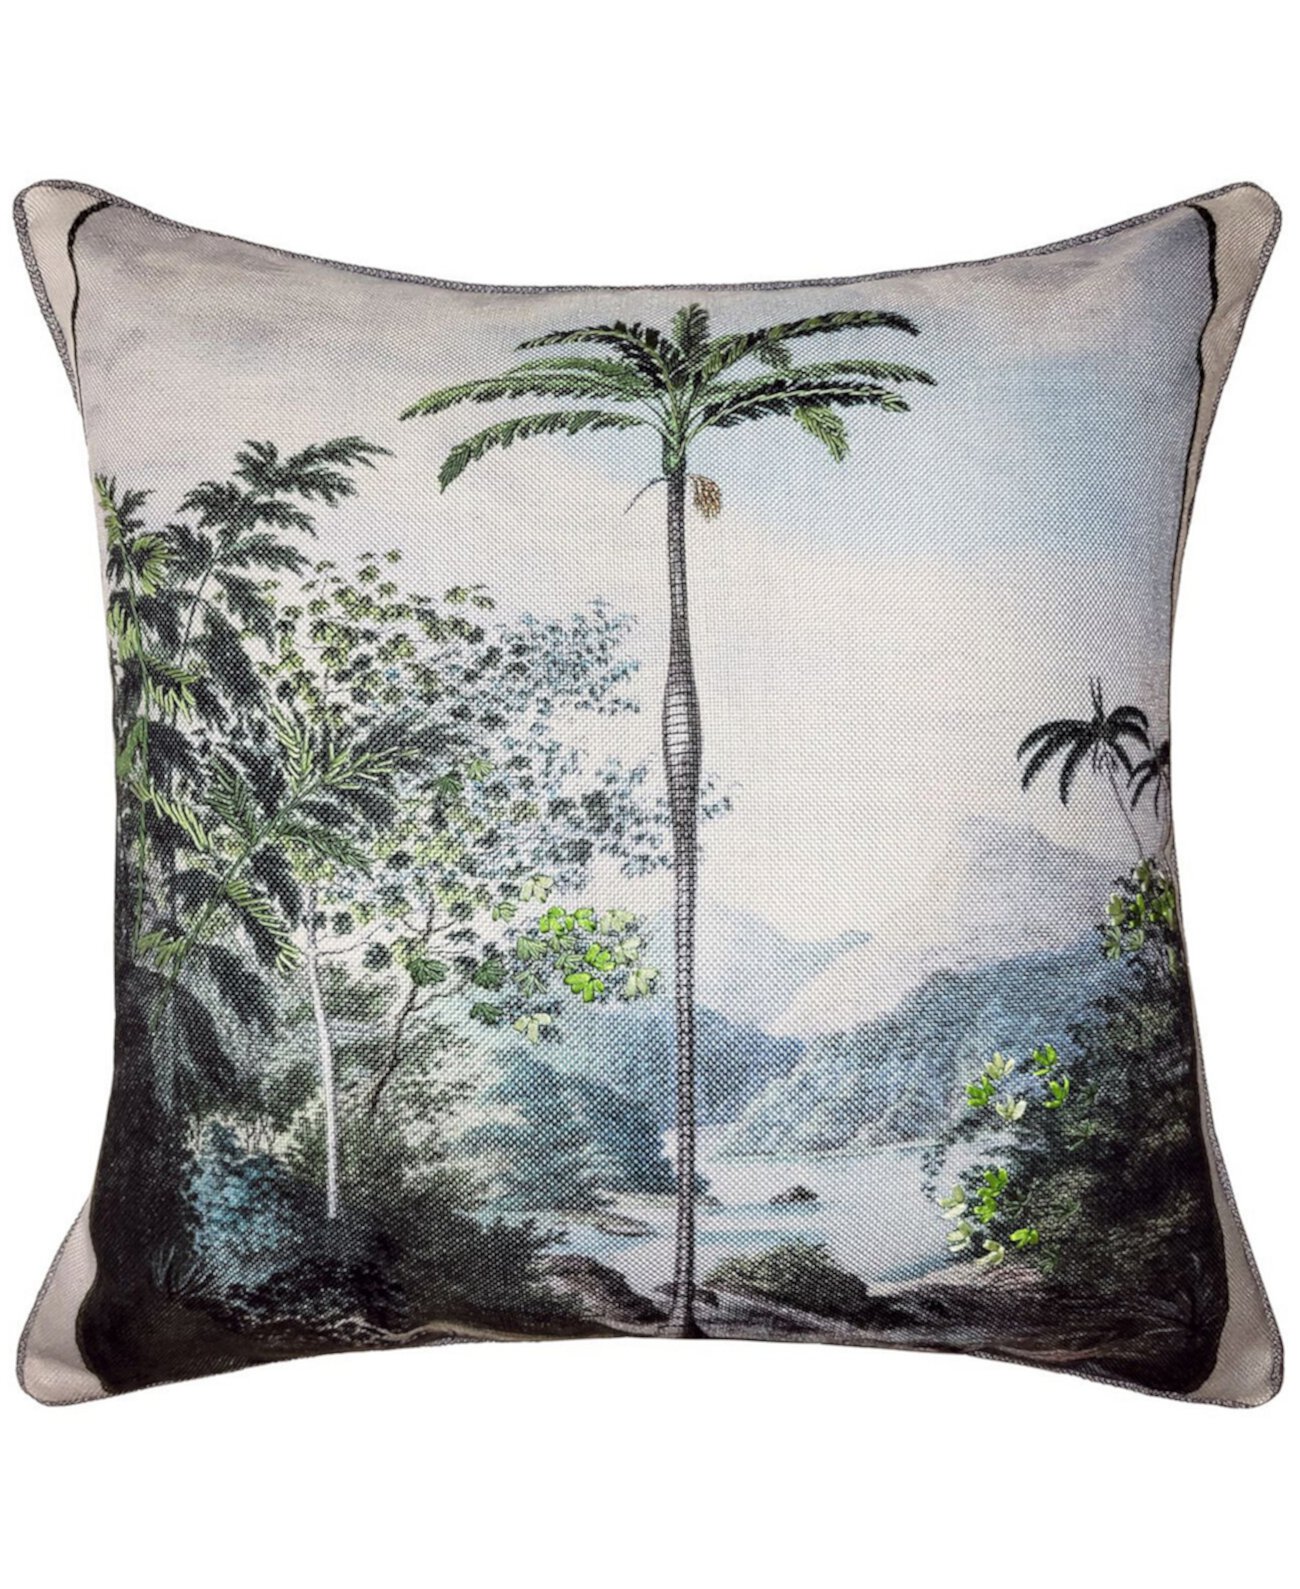 Декоративная подушка с вышивкой «Тропический рай» NYBG, 20 x 20 дюймов Edie@Home